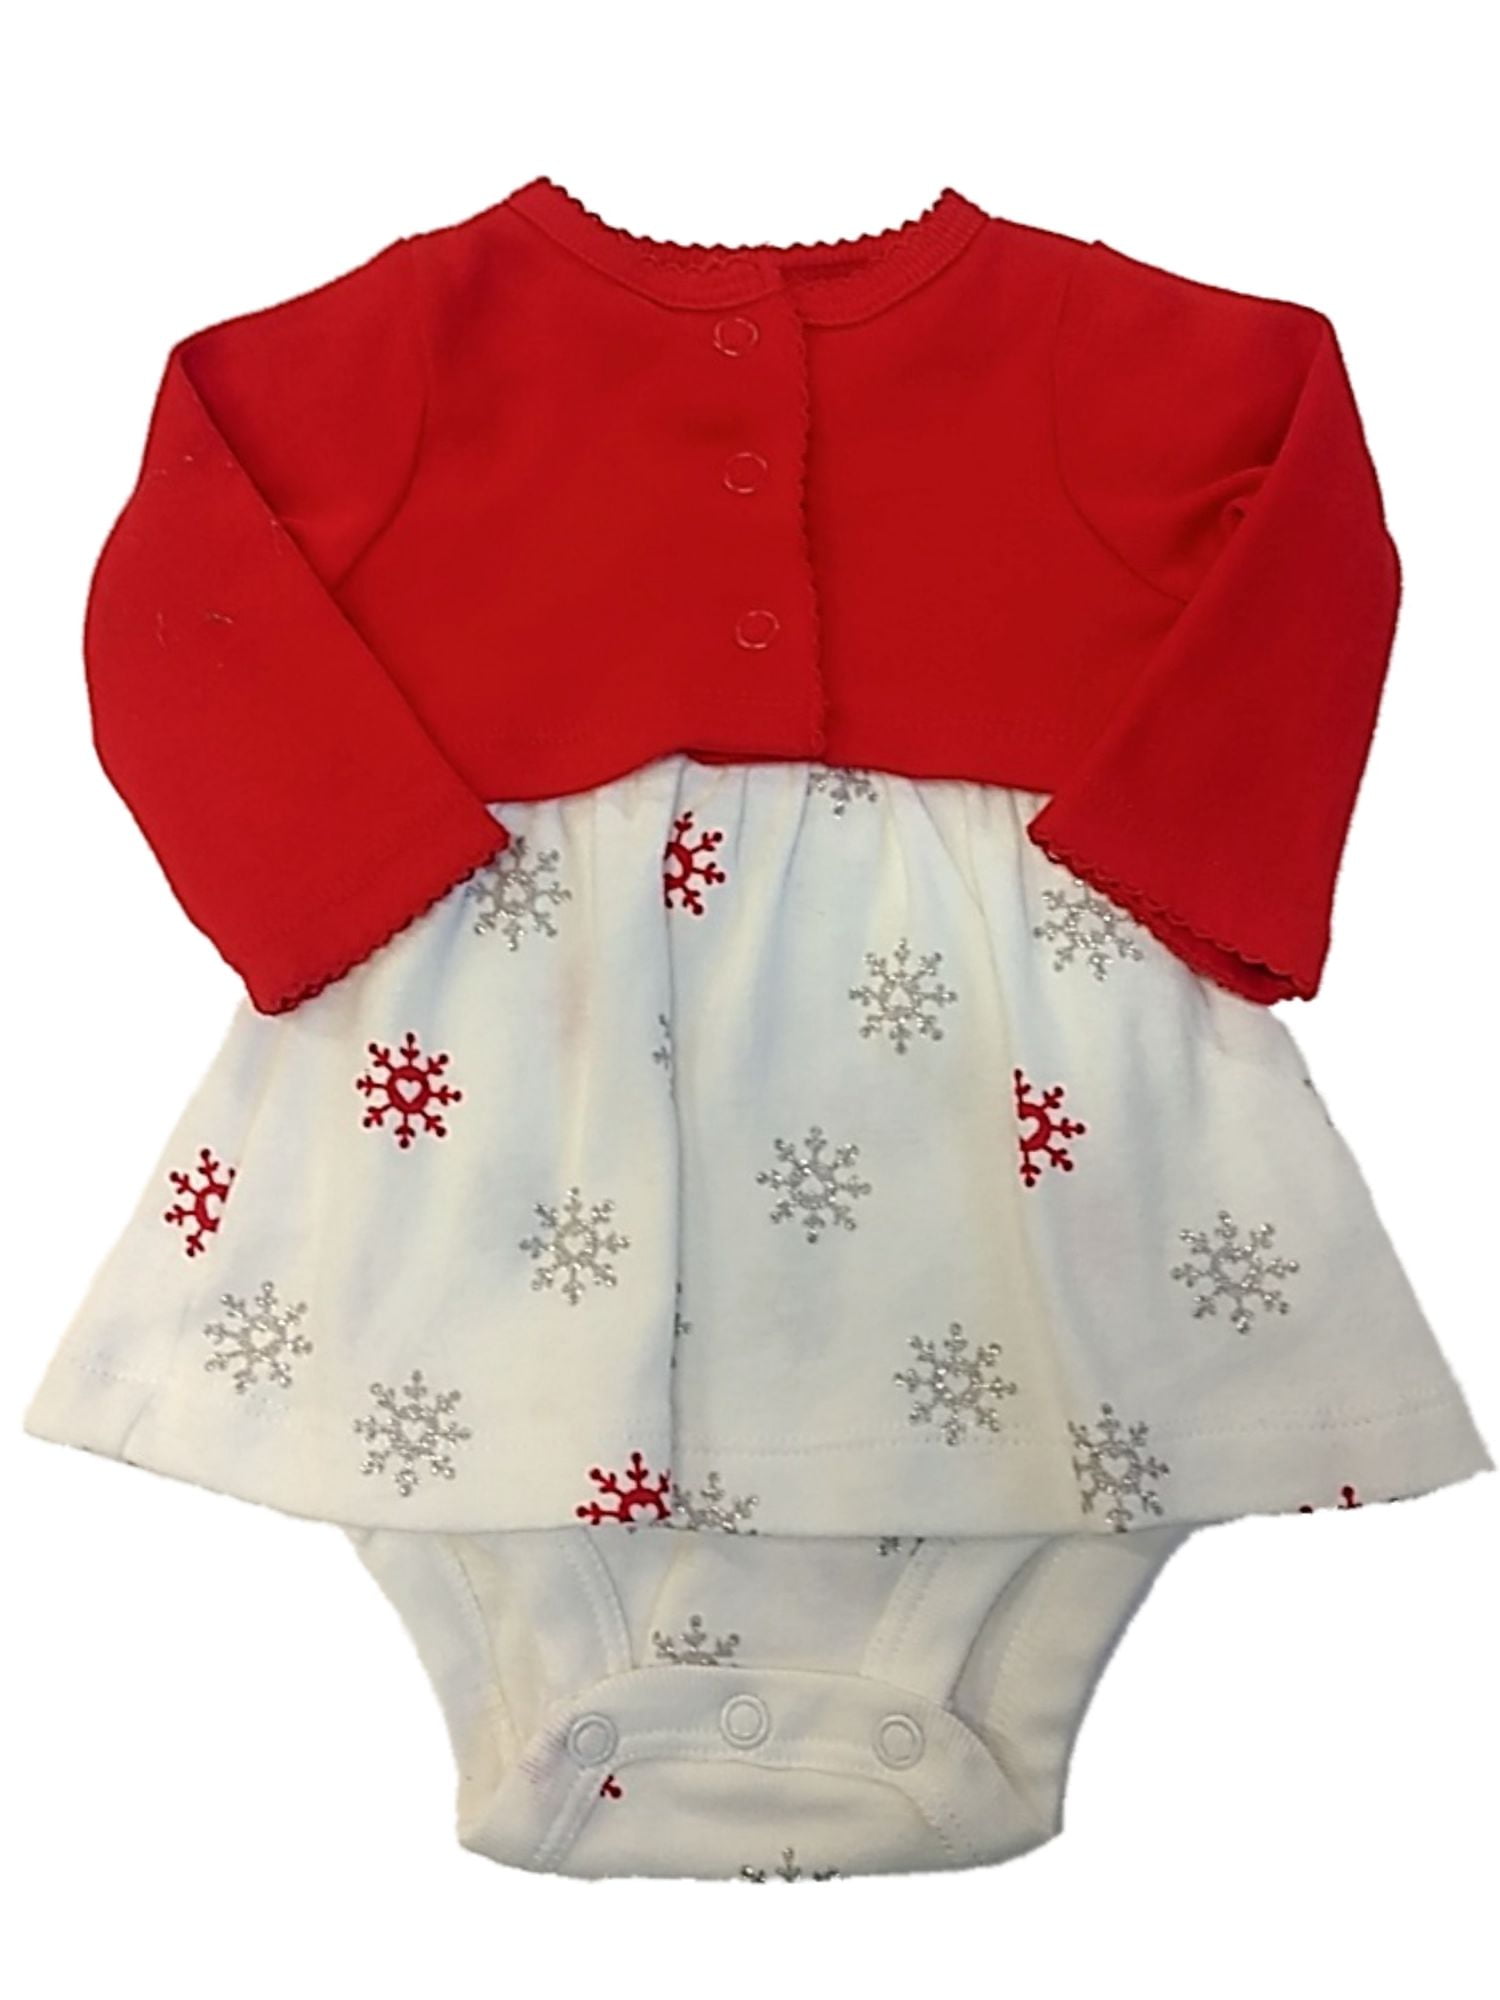 XMAS Infant White Bodysuit Winter Red White Snowflake Flower Baby Dress NB-12M